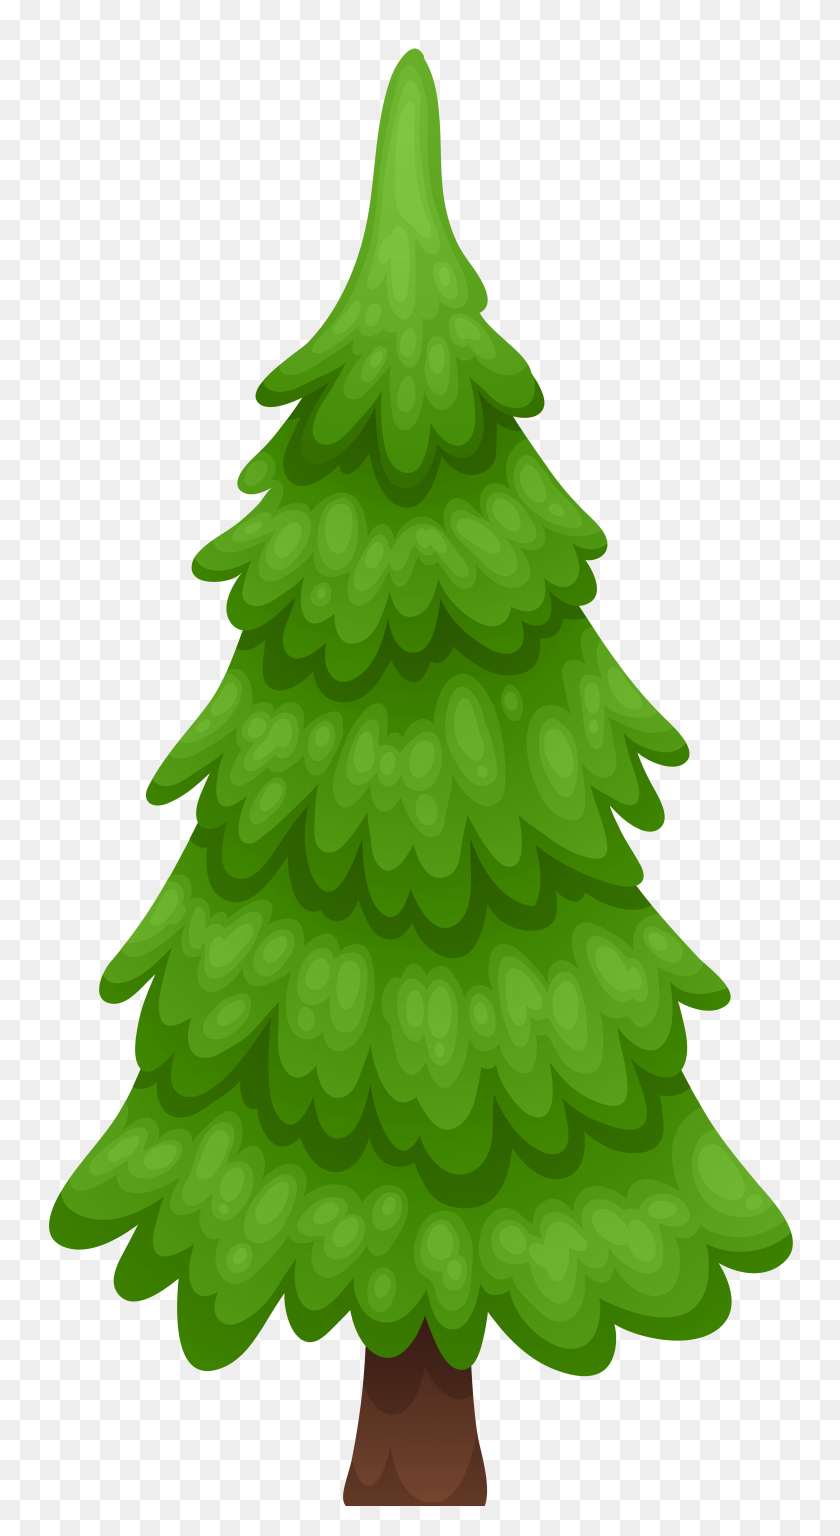 Cartoon Pine Tree Clipart | Free download best Cartoon Pine Tree